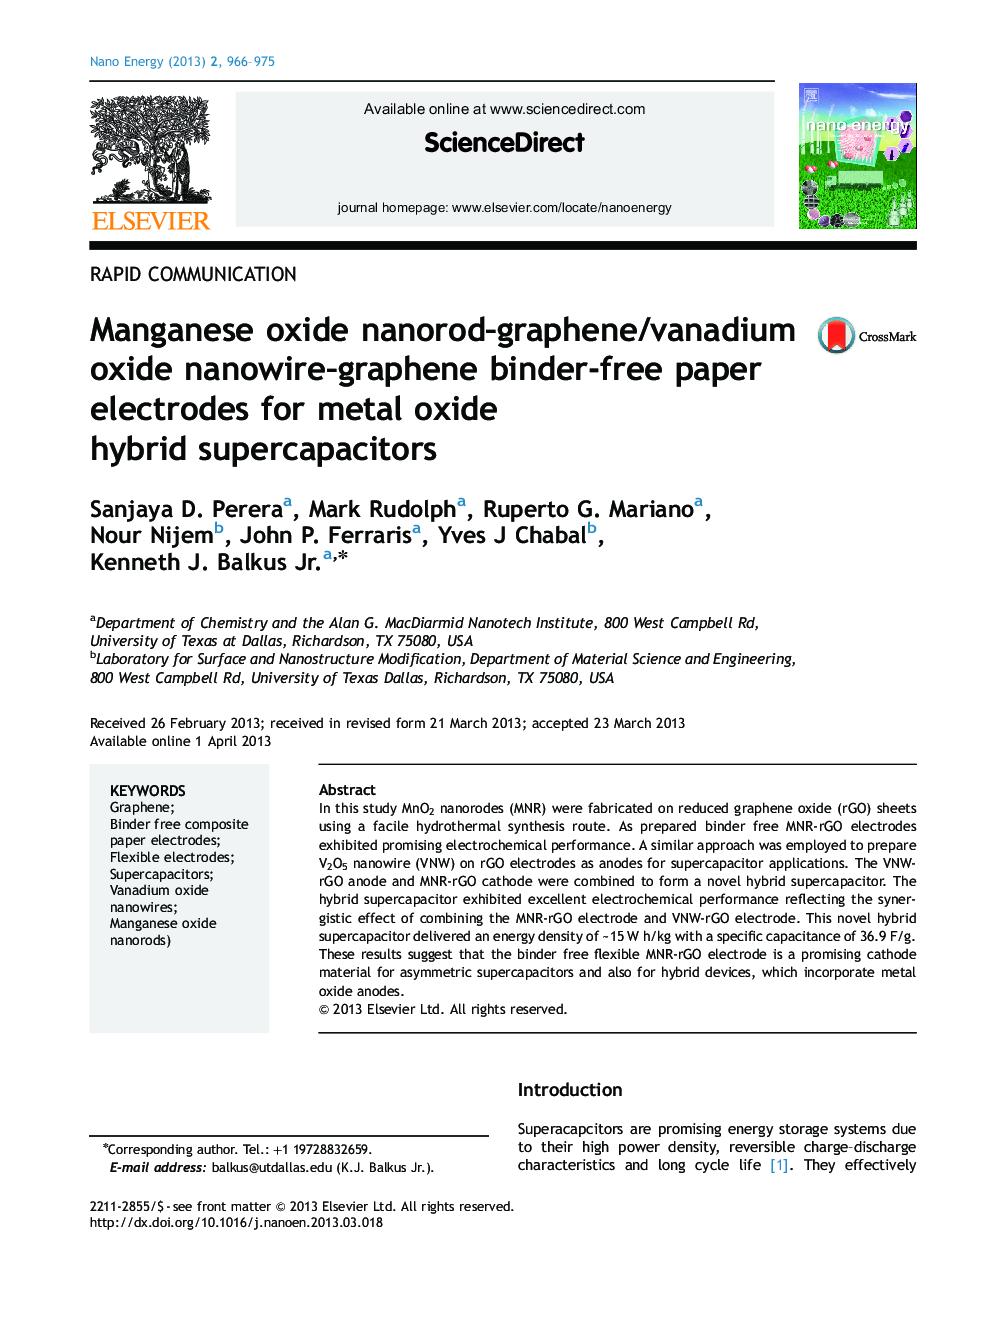 Manganese oxide nanorod-graphene/vanadium oxide nanowire-graphene binder-free paper electrodes for metal oxide hybrid supercapacitors